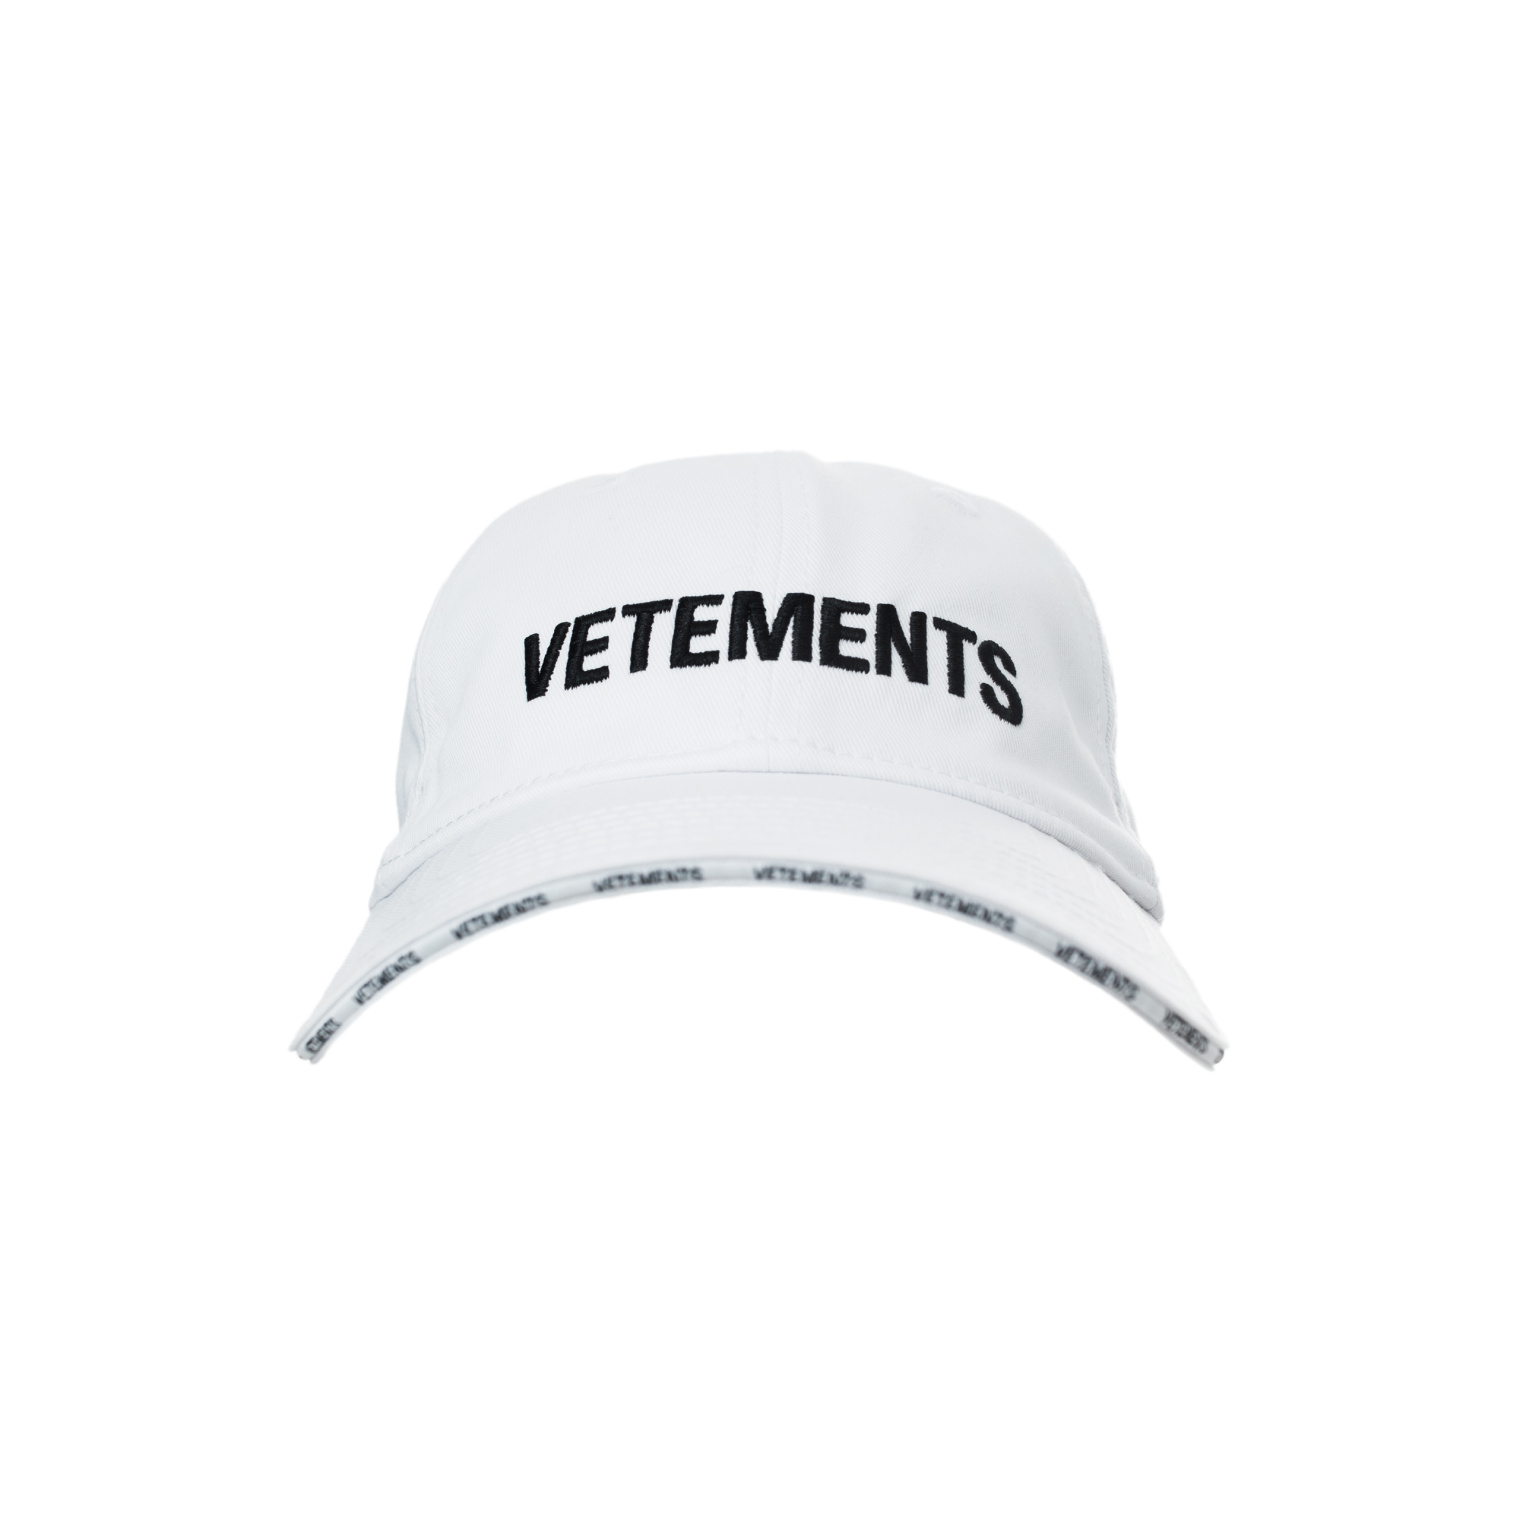 Buy VETEMENTS men white embroidered logo cap for $470 online on